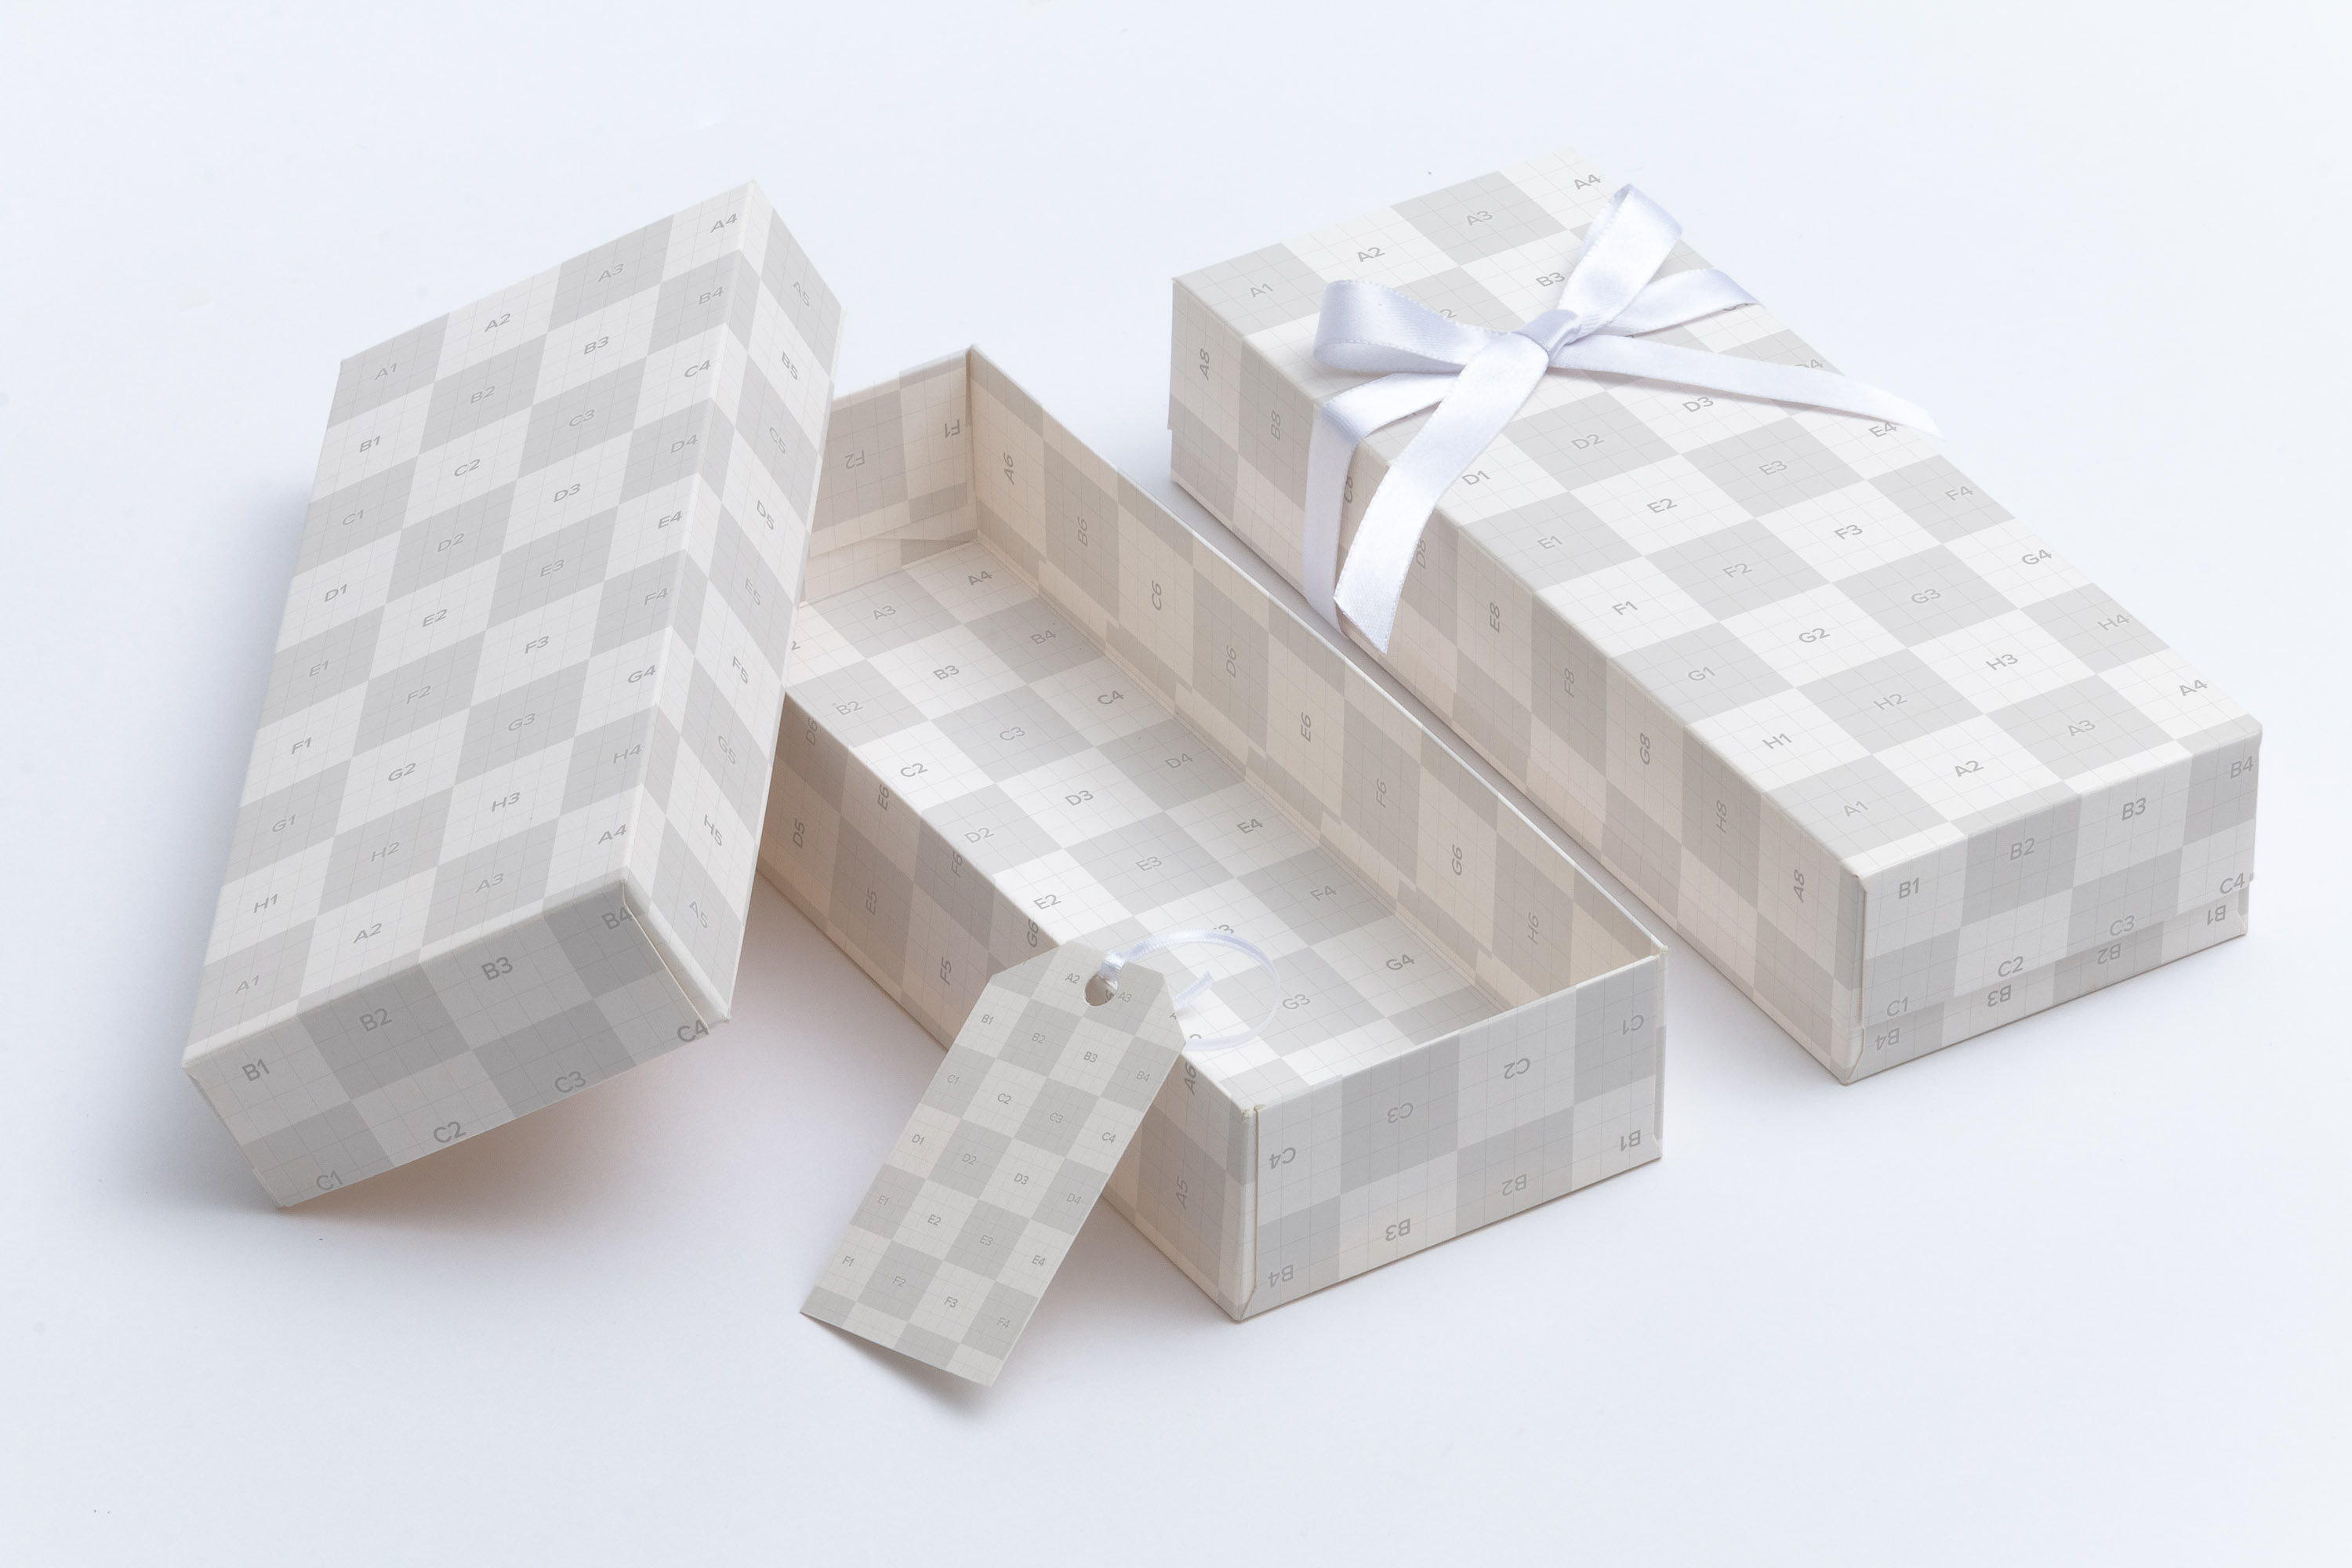 矩形礼品盒包装设计效果图样机03 Rectangular Gift Box Mockup 03插图(1)